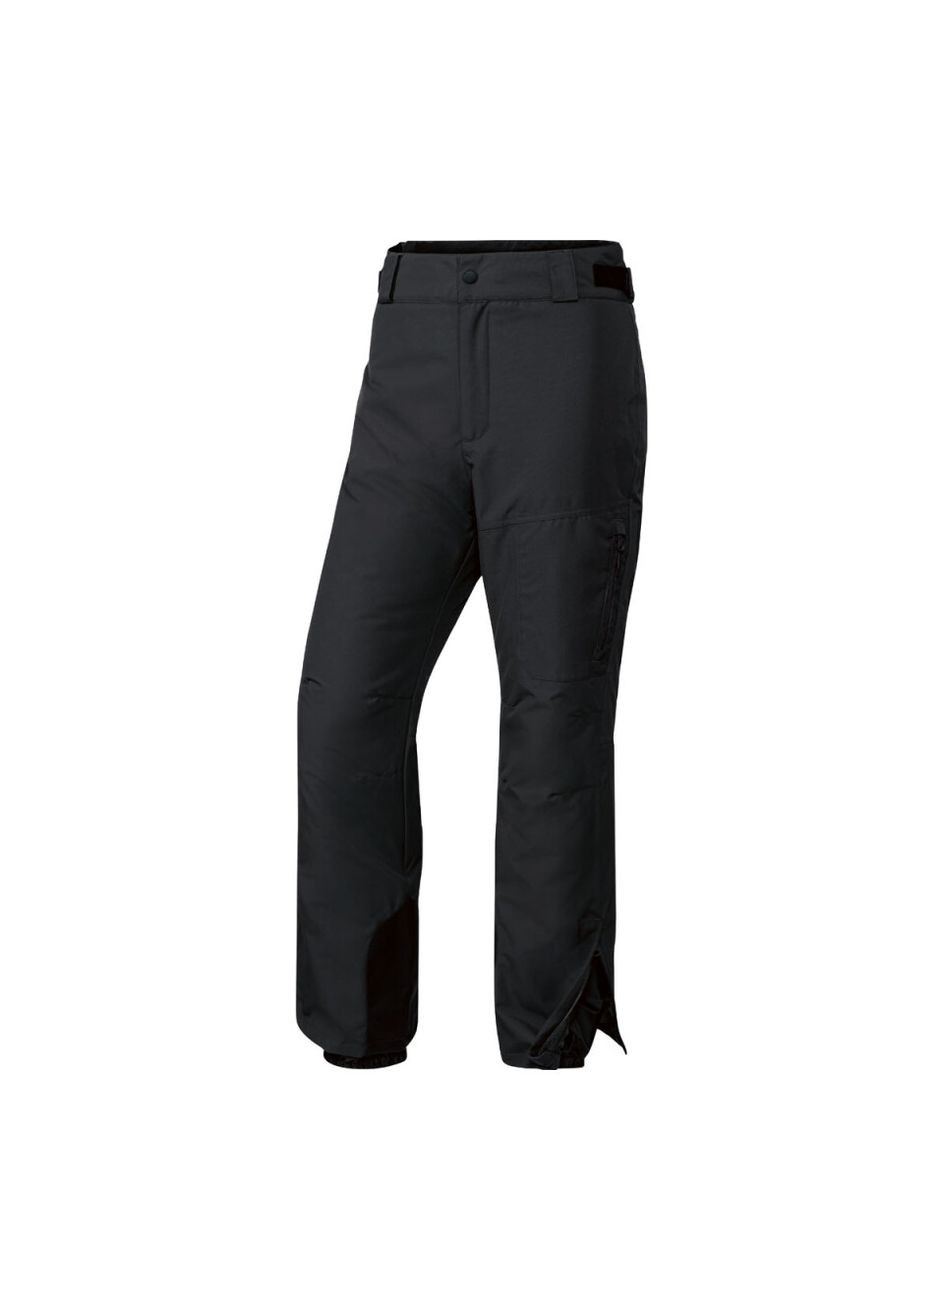 Горнолыжные брюки мембранные (3000мм) для мужчины by Newcential 389609 Crivit (264382259)